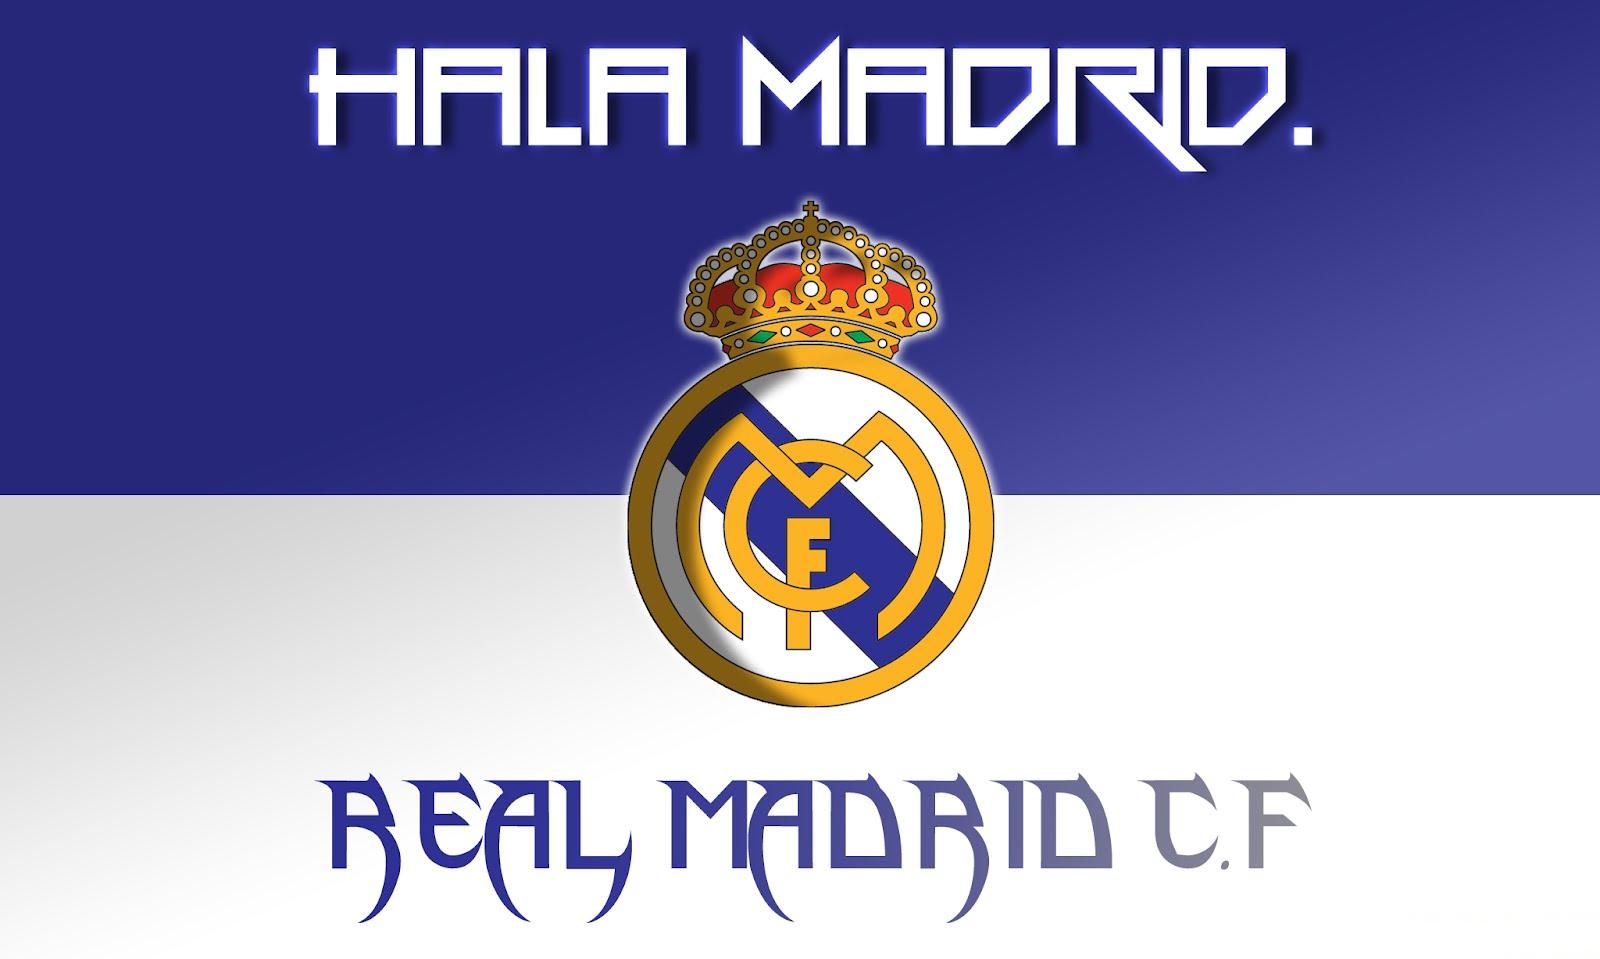 Imagenes Del Real Madrid Fondos De Pantalla